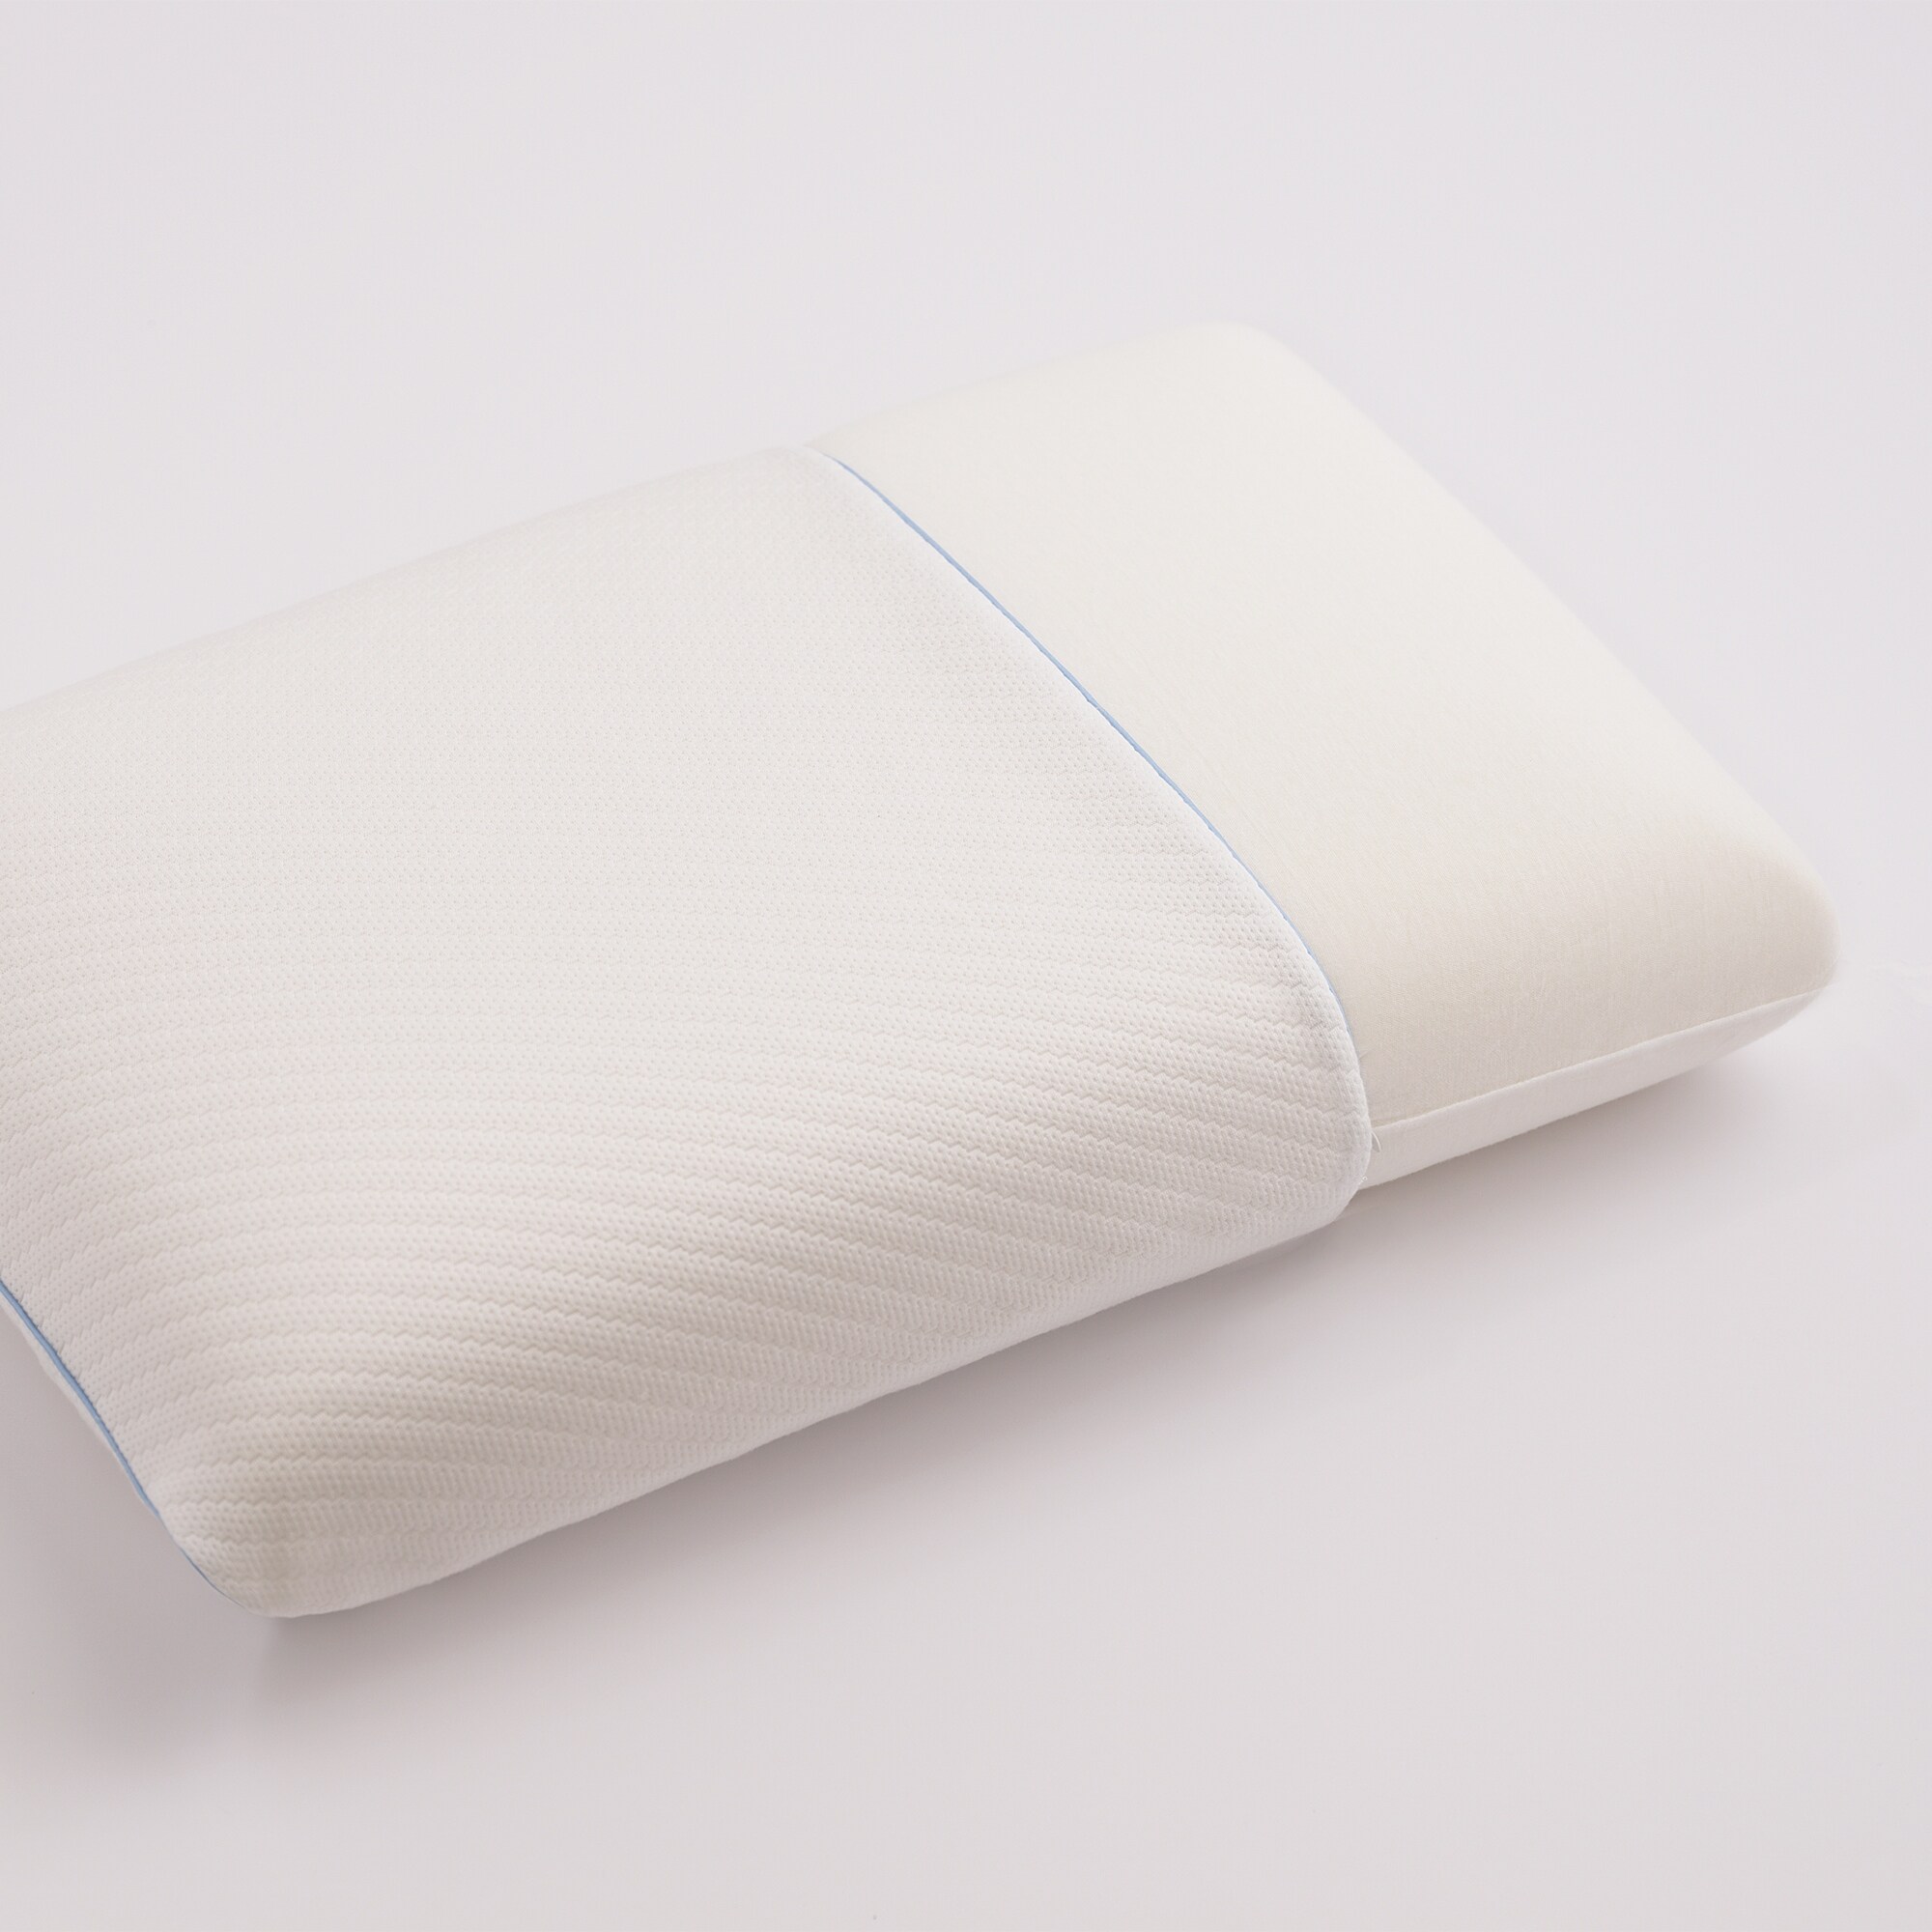 Tencel Cover Biofoam Conforming Pillow by Cozy Classics - White